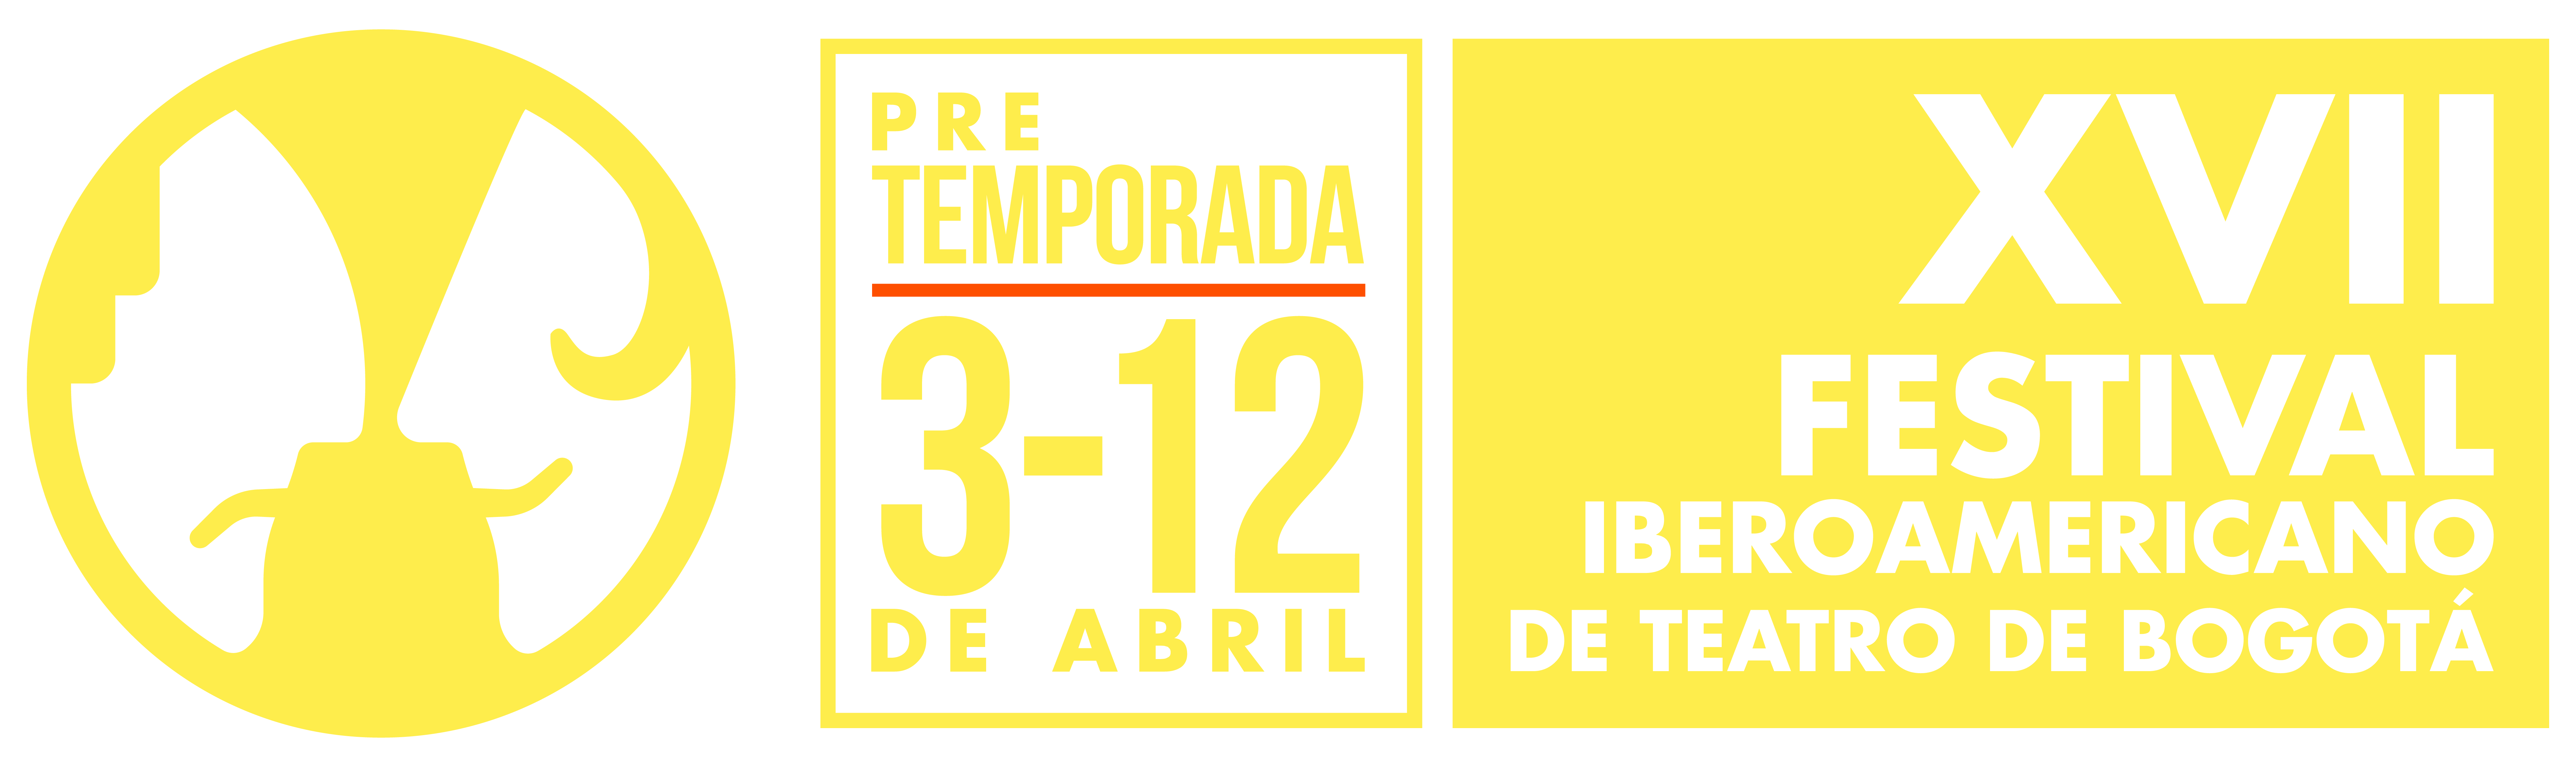 Festival Iberoamericano de teatro de Bogotá